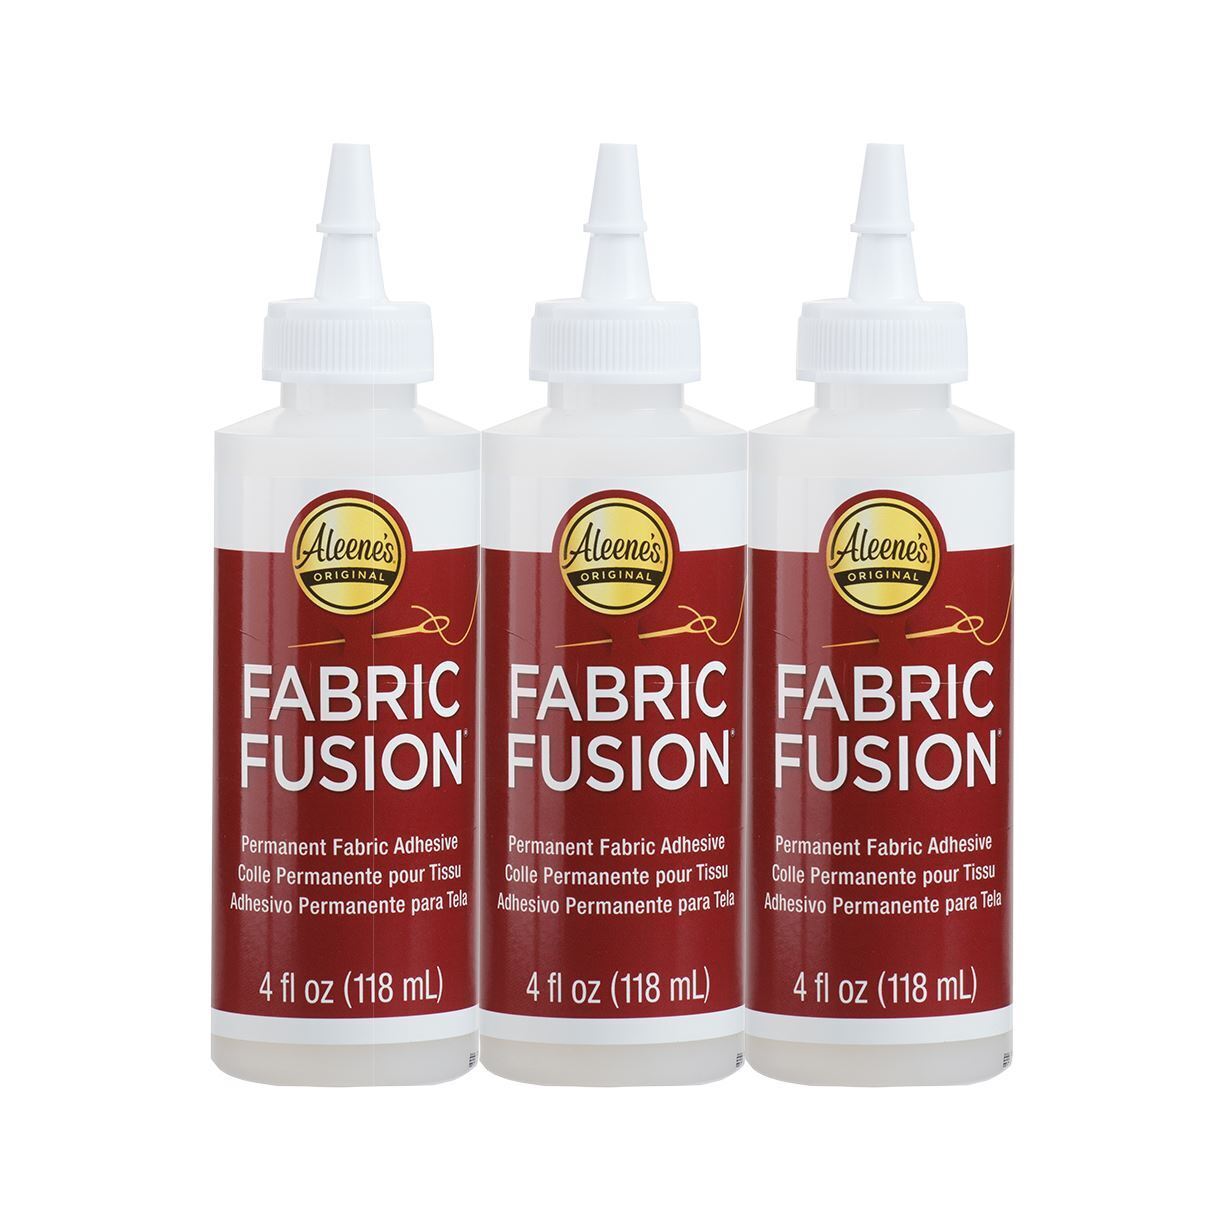 Aleene's Fabric Fusion Pump Spray 8 oz